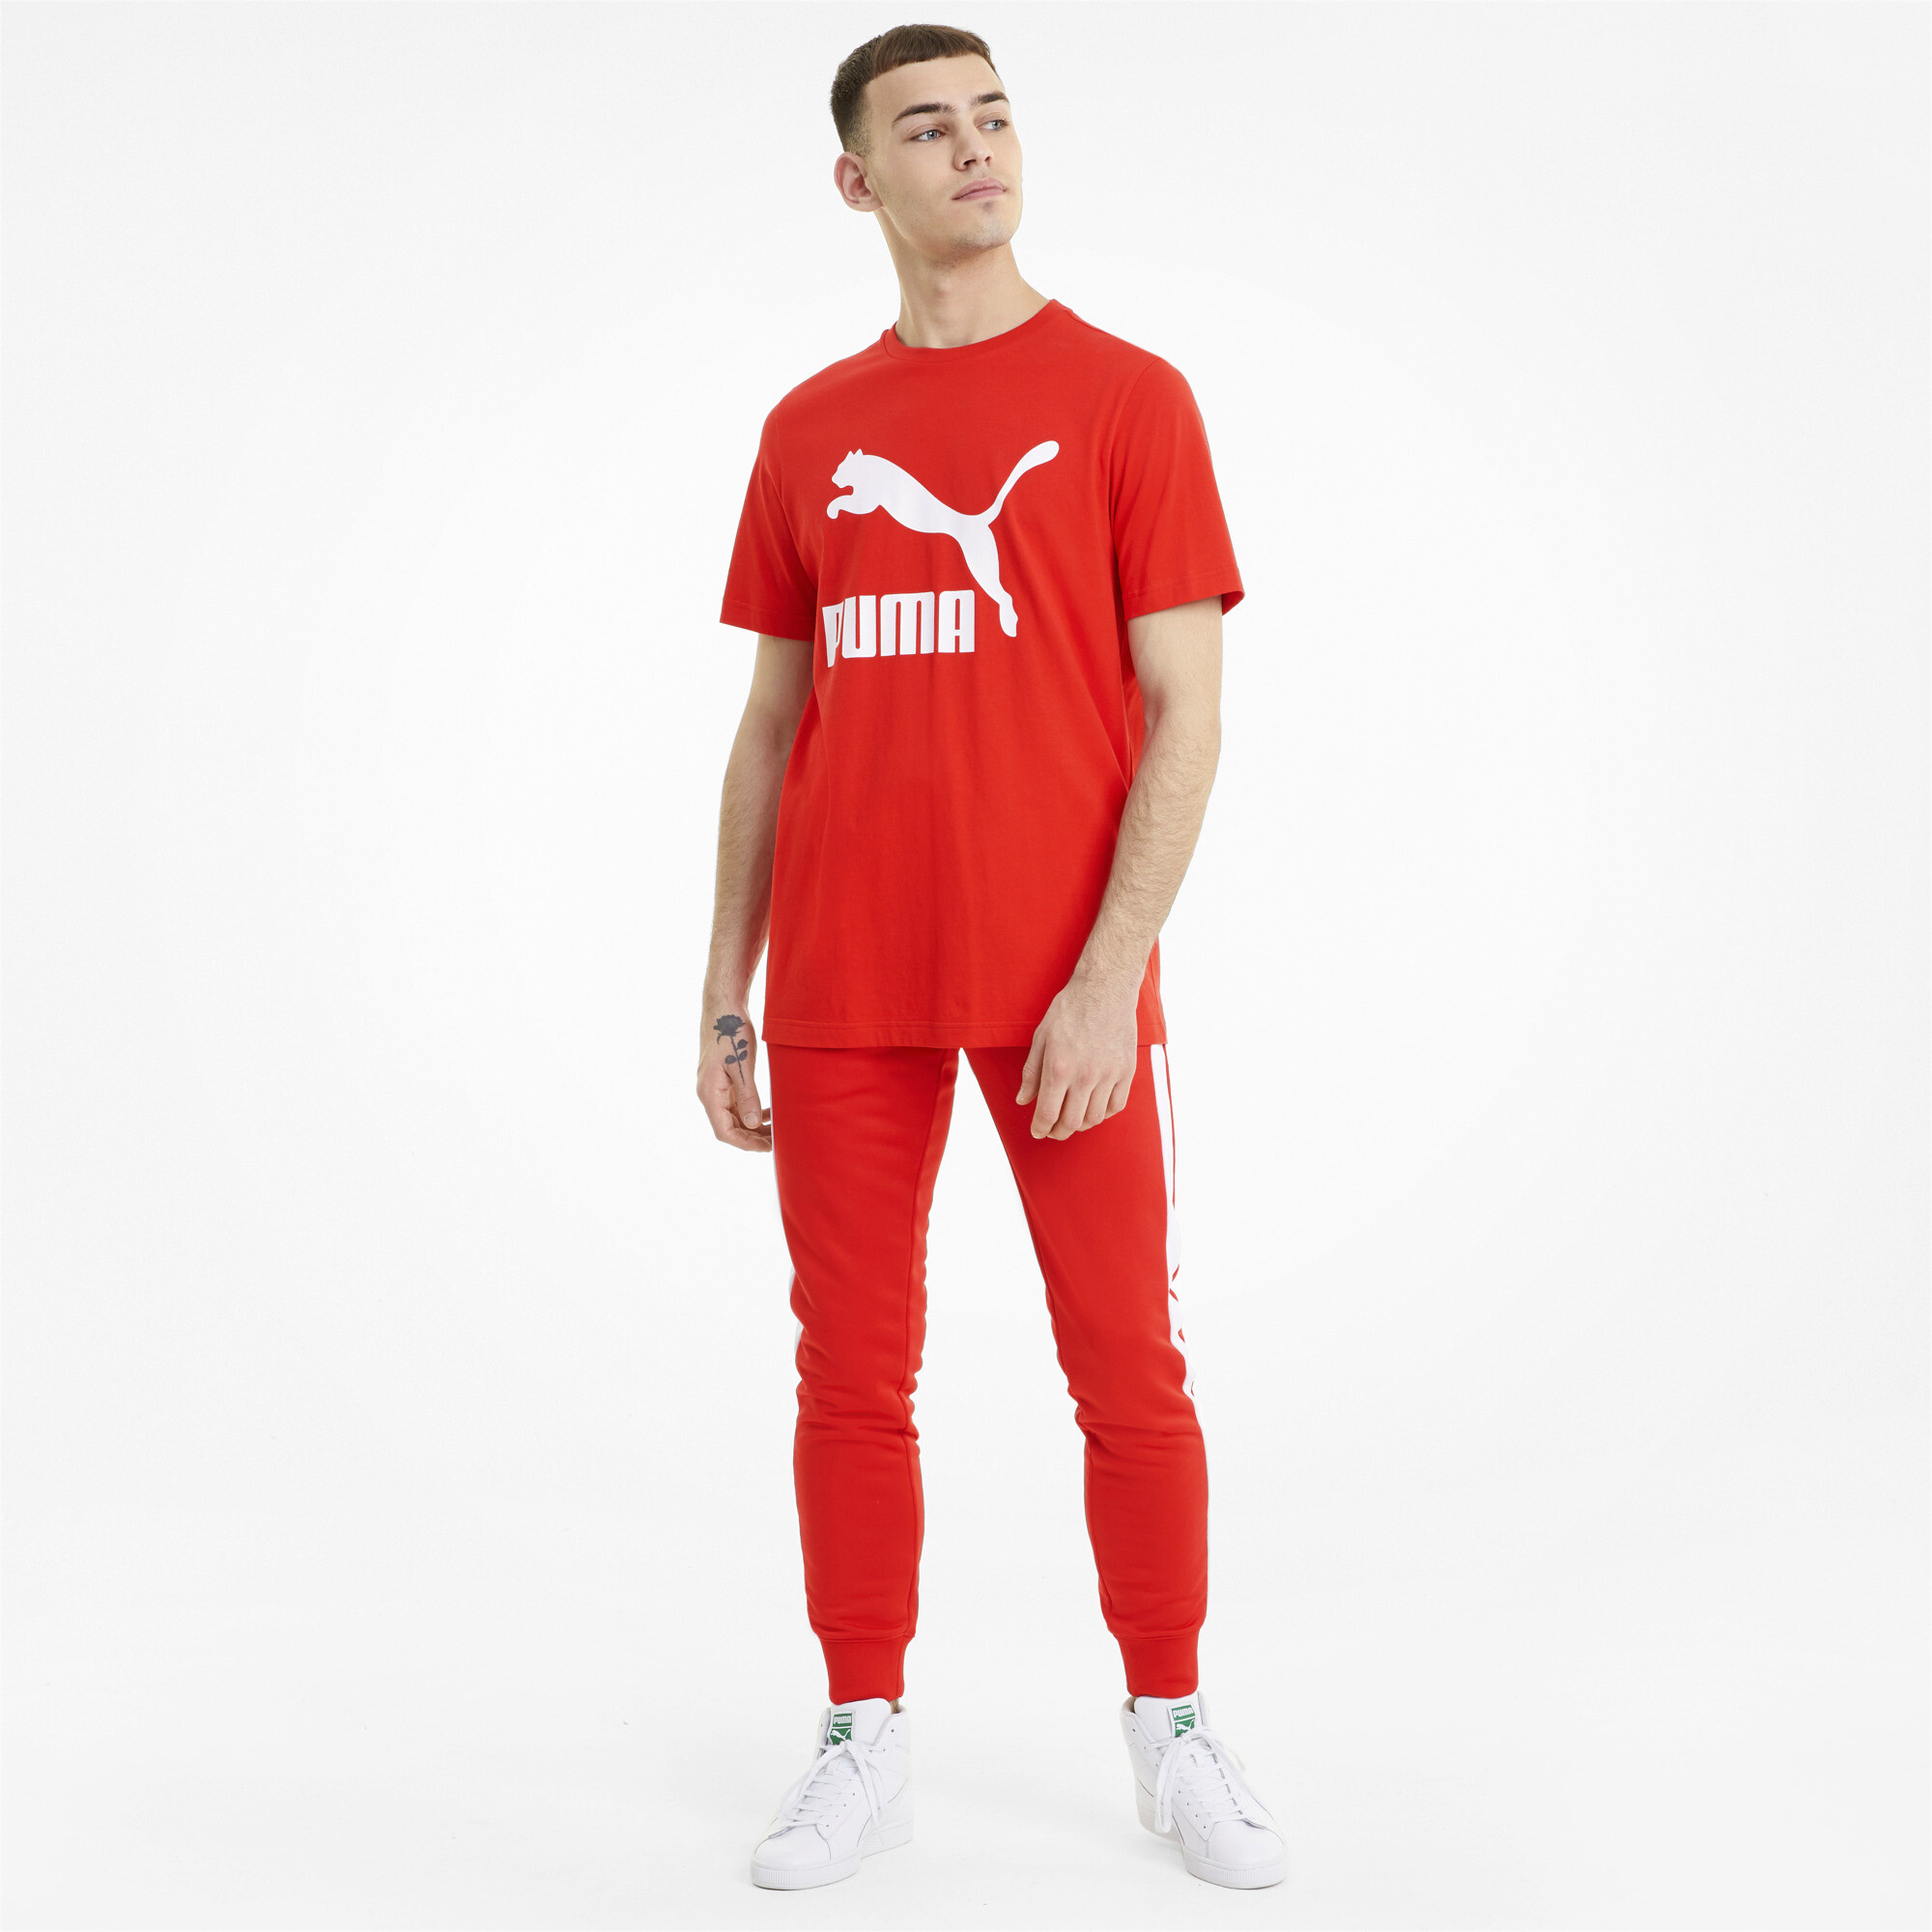 Men's Puma Classics's Logo T-Shirt, Red, Size S, Clothing